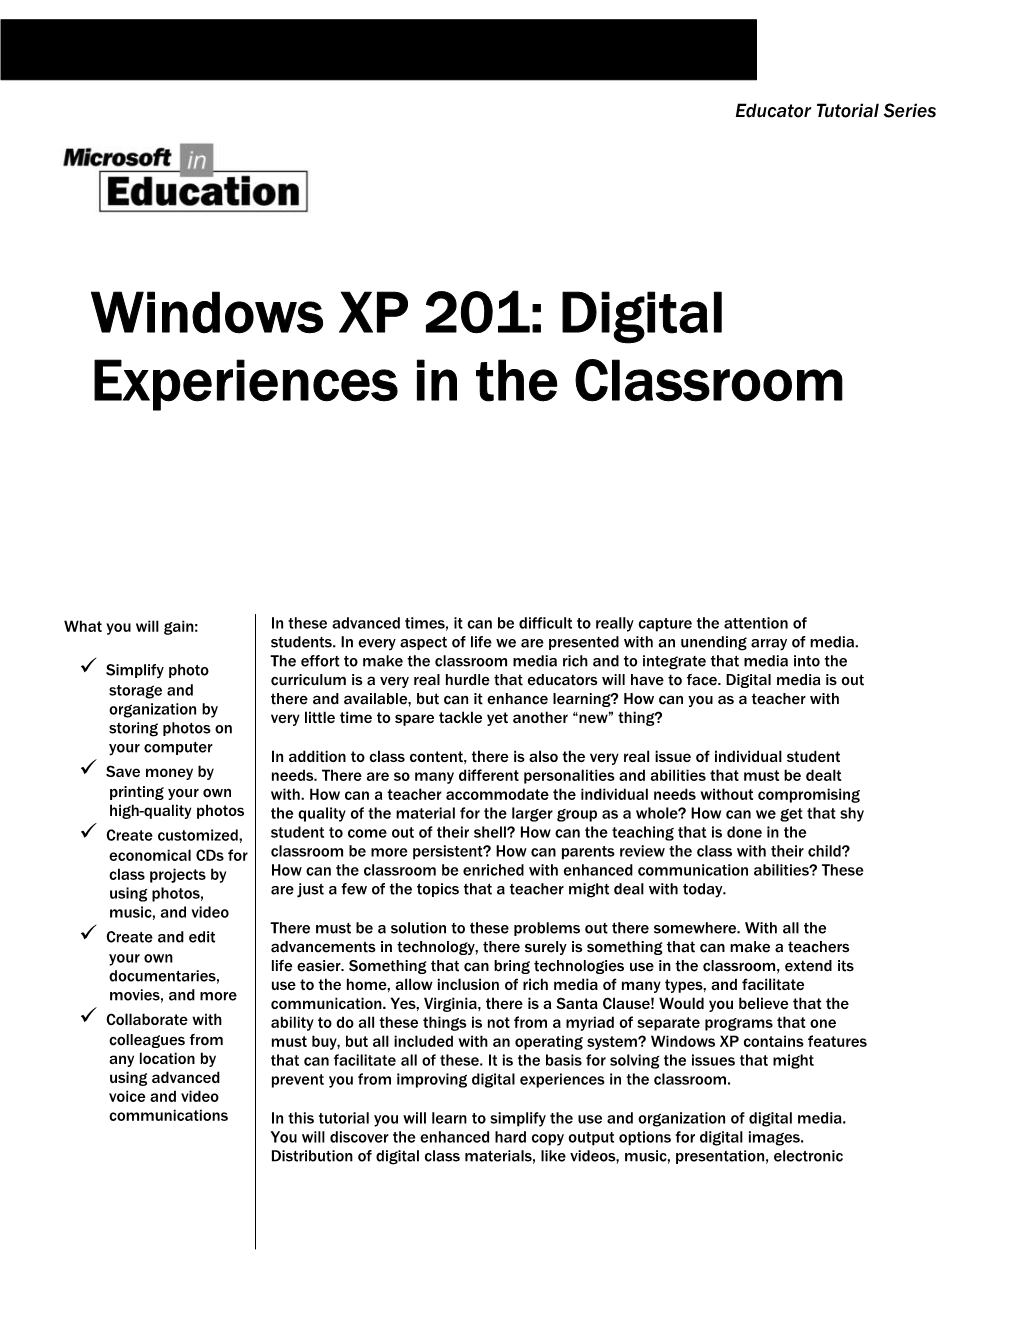 Windows XP 201: Digital Experiences in the Classroom